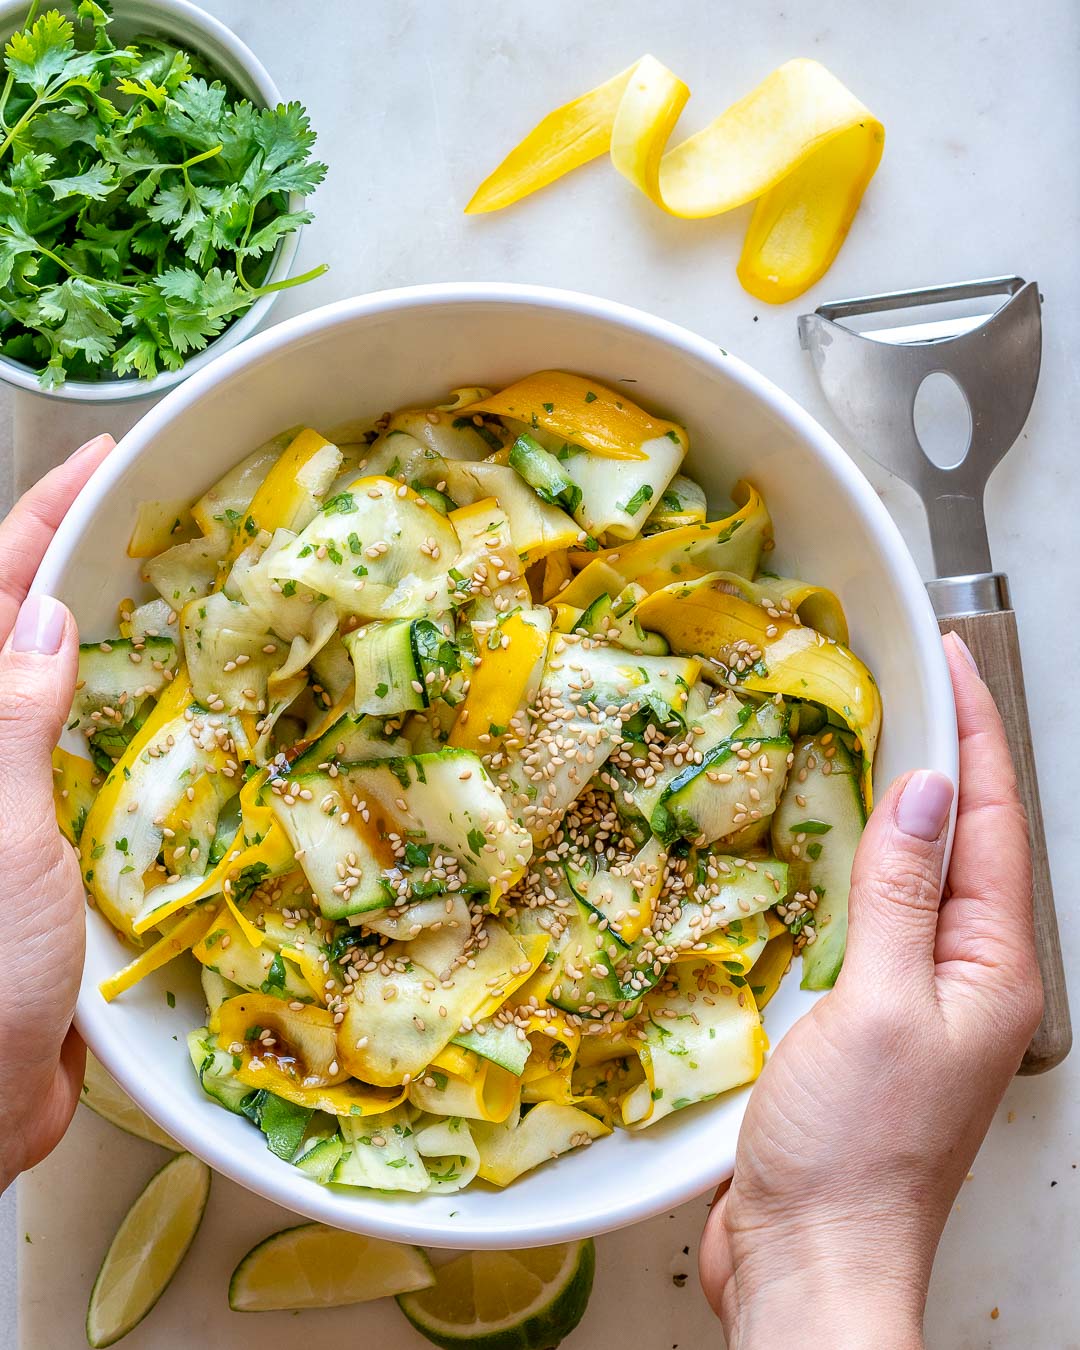 https://cleanfoodcrush.com/wp-content/uploads/2020/07/CleanFoodCrush-Healthy-Recipes-Marinated-Zucchini-Salad.jpg